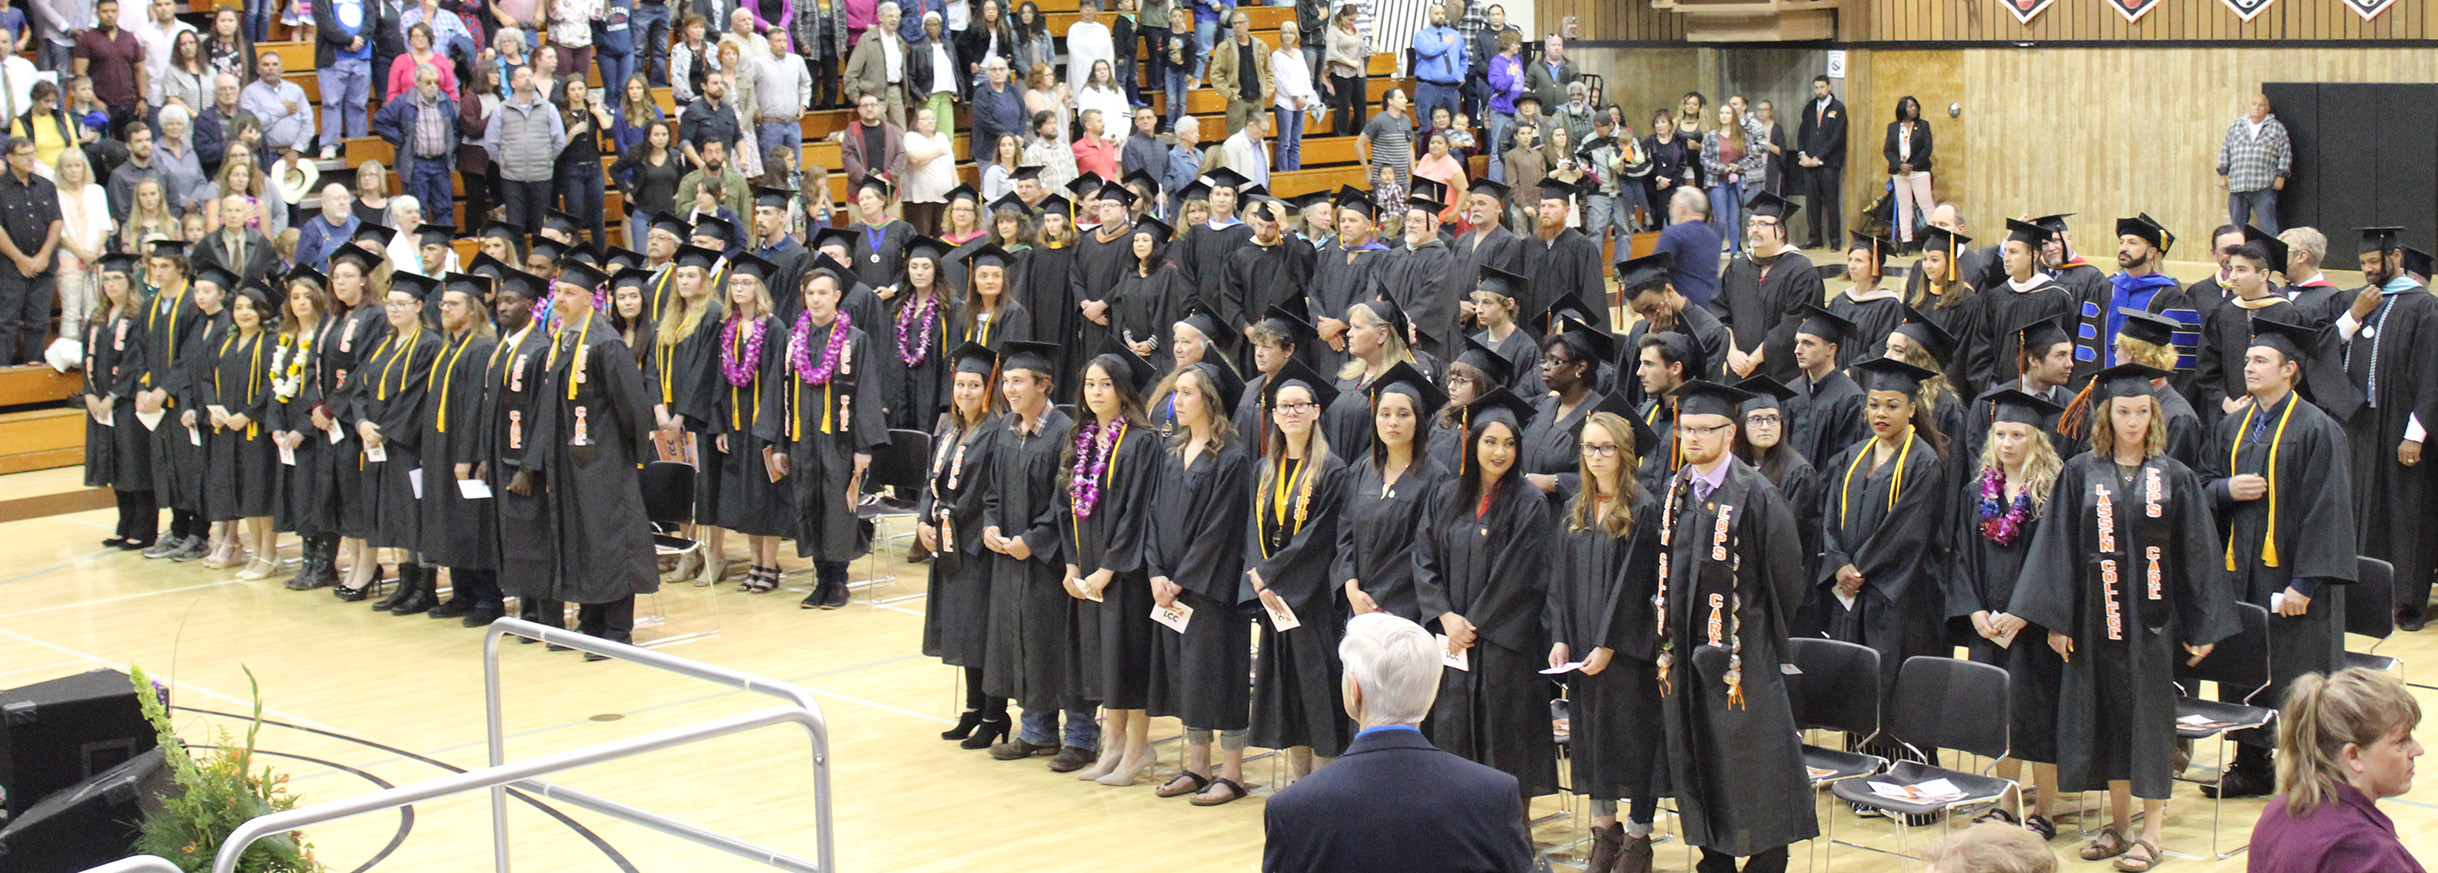 Students Receiving their diplomas